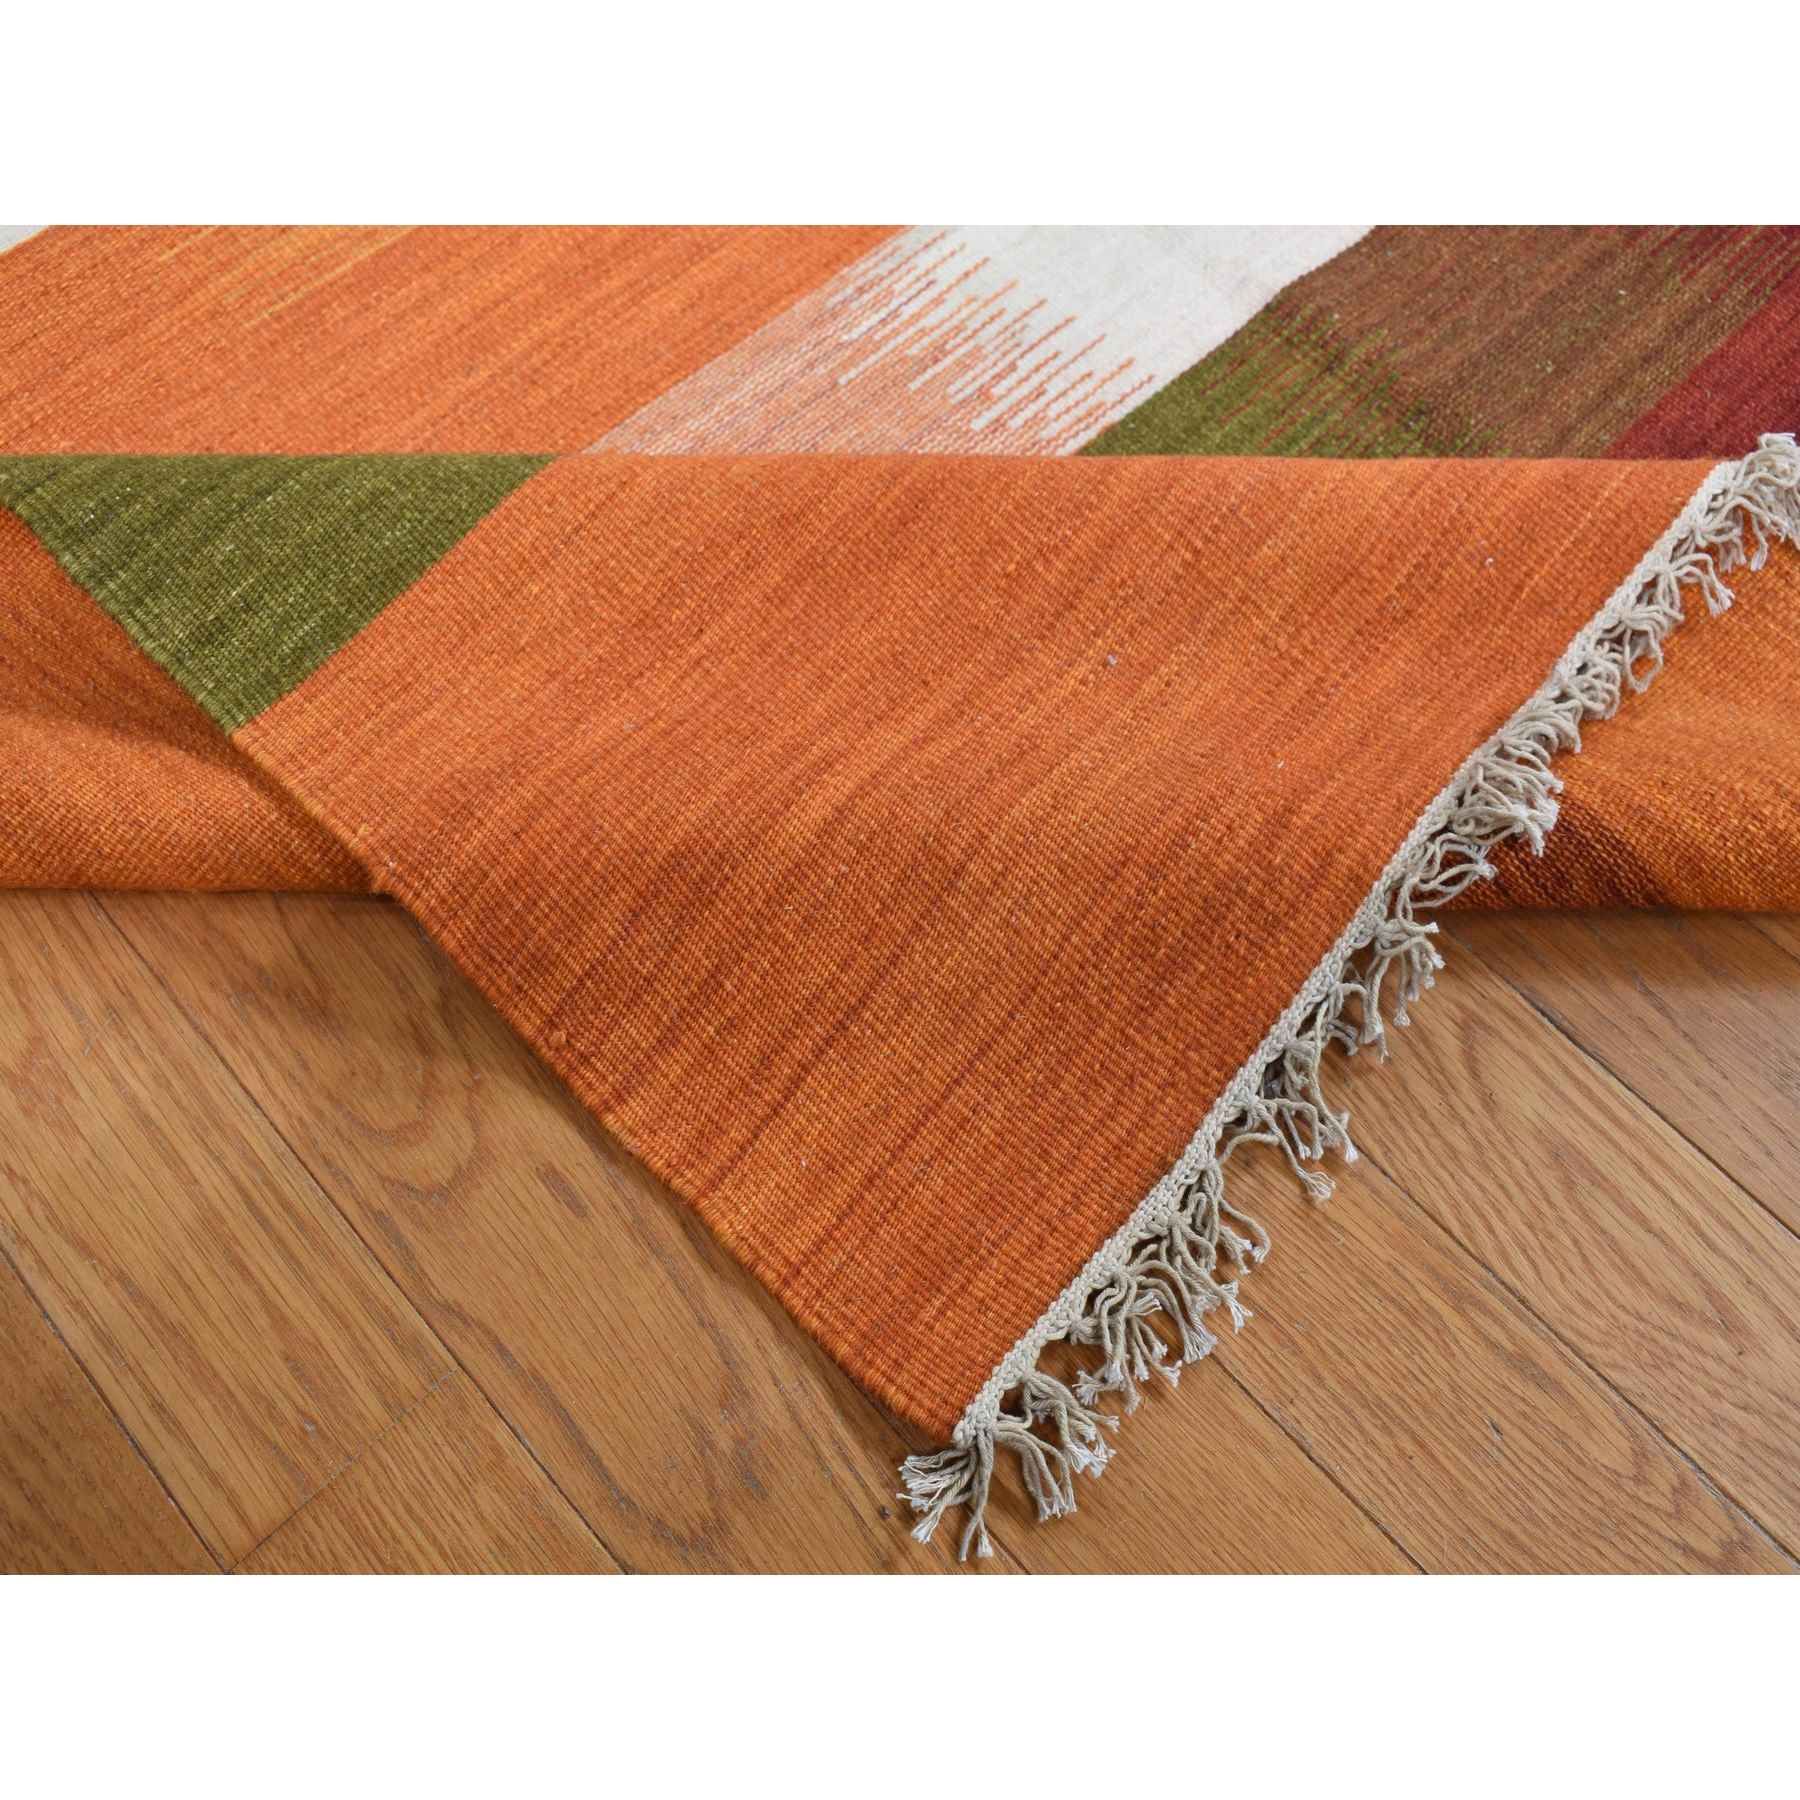 Flat-Weave-Hand-Woven-Rug-439400